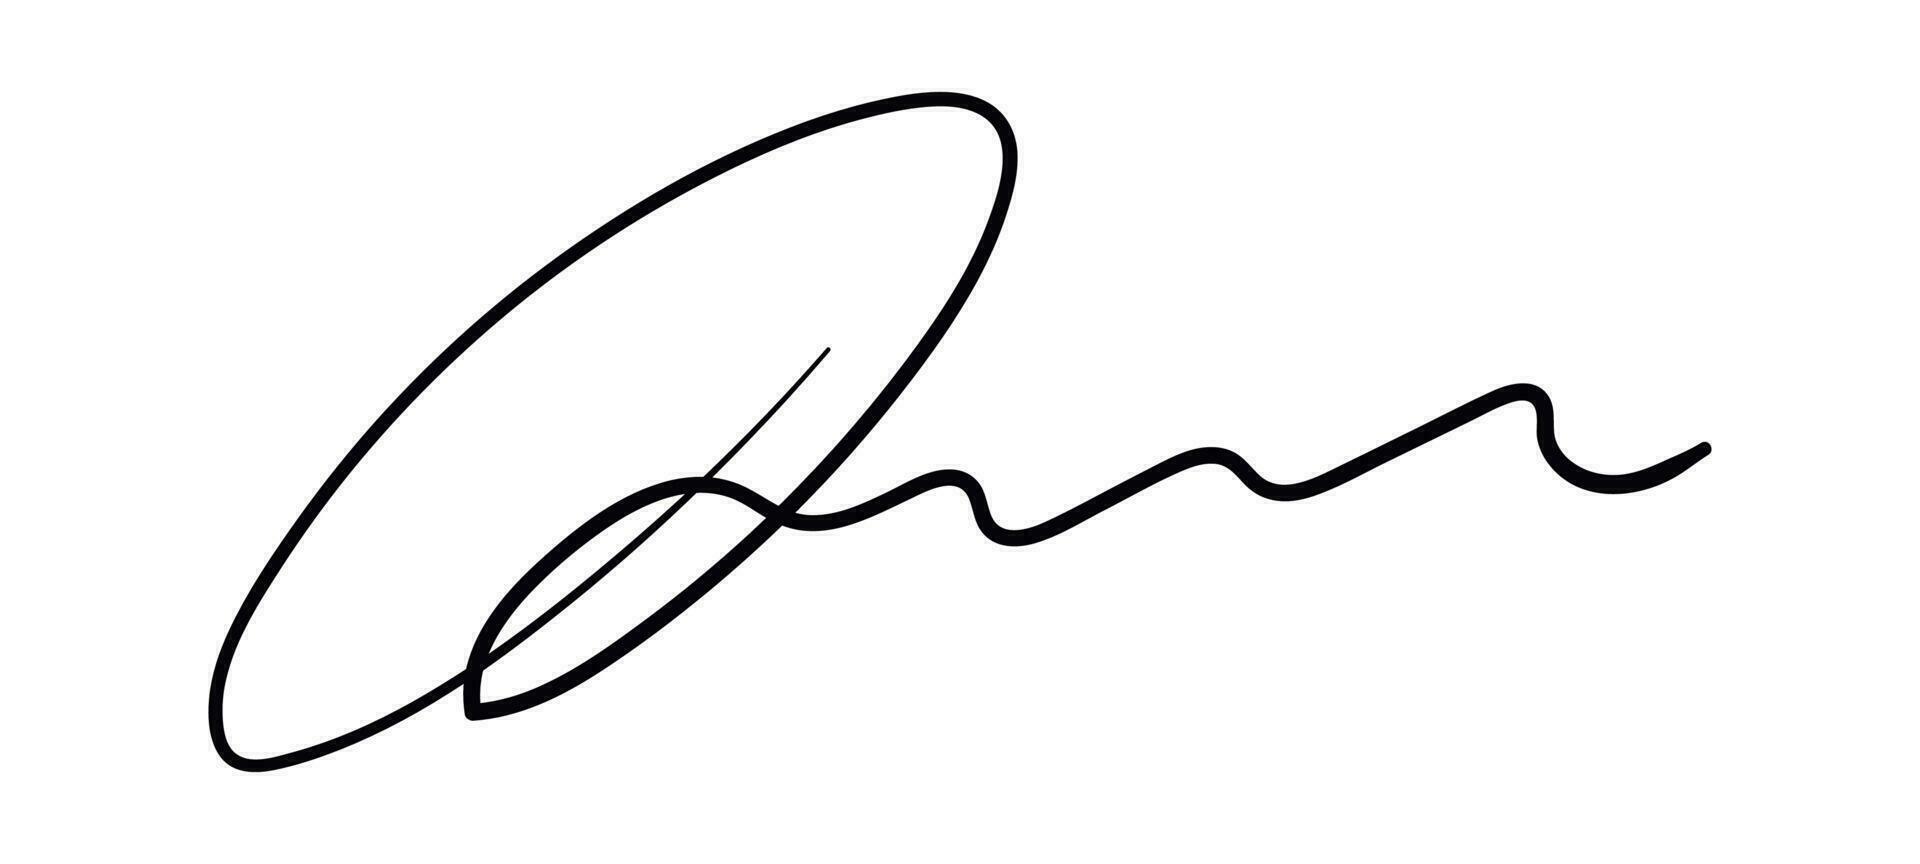 falso mano dibujado autógrafos colocar. escrito firma Escribiendo para negocio certificado o carta. vector aislado ilustración